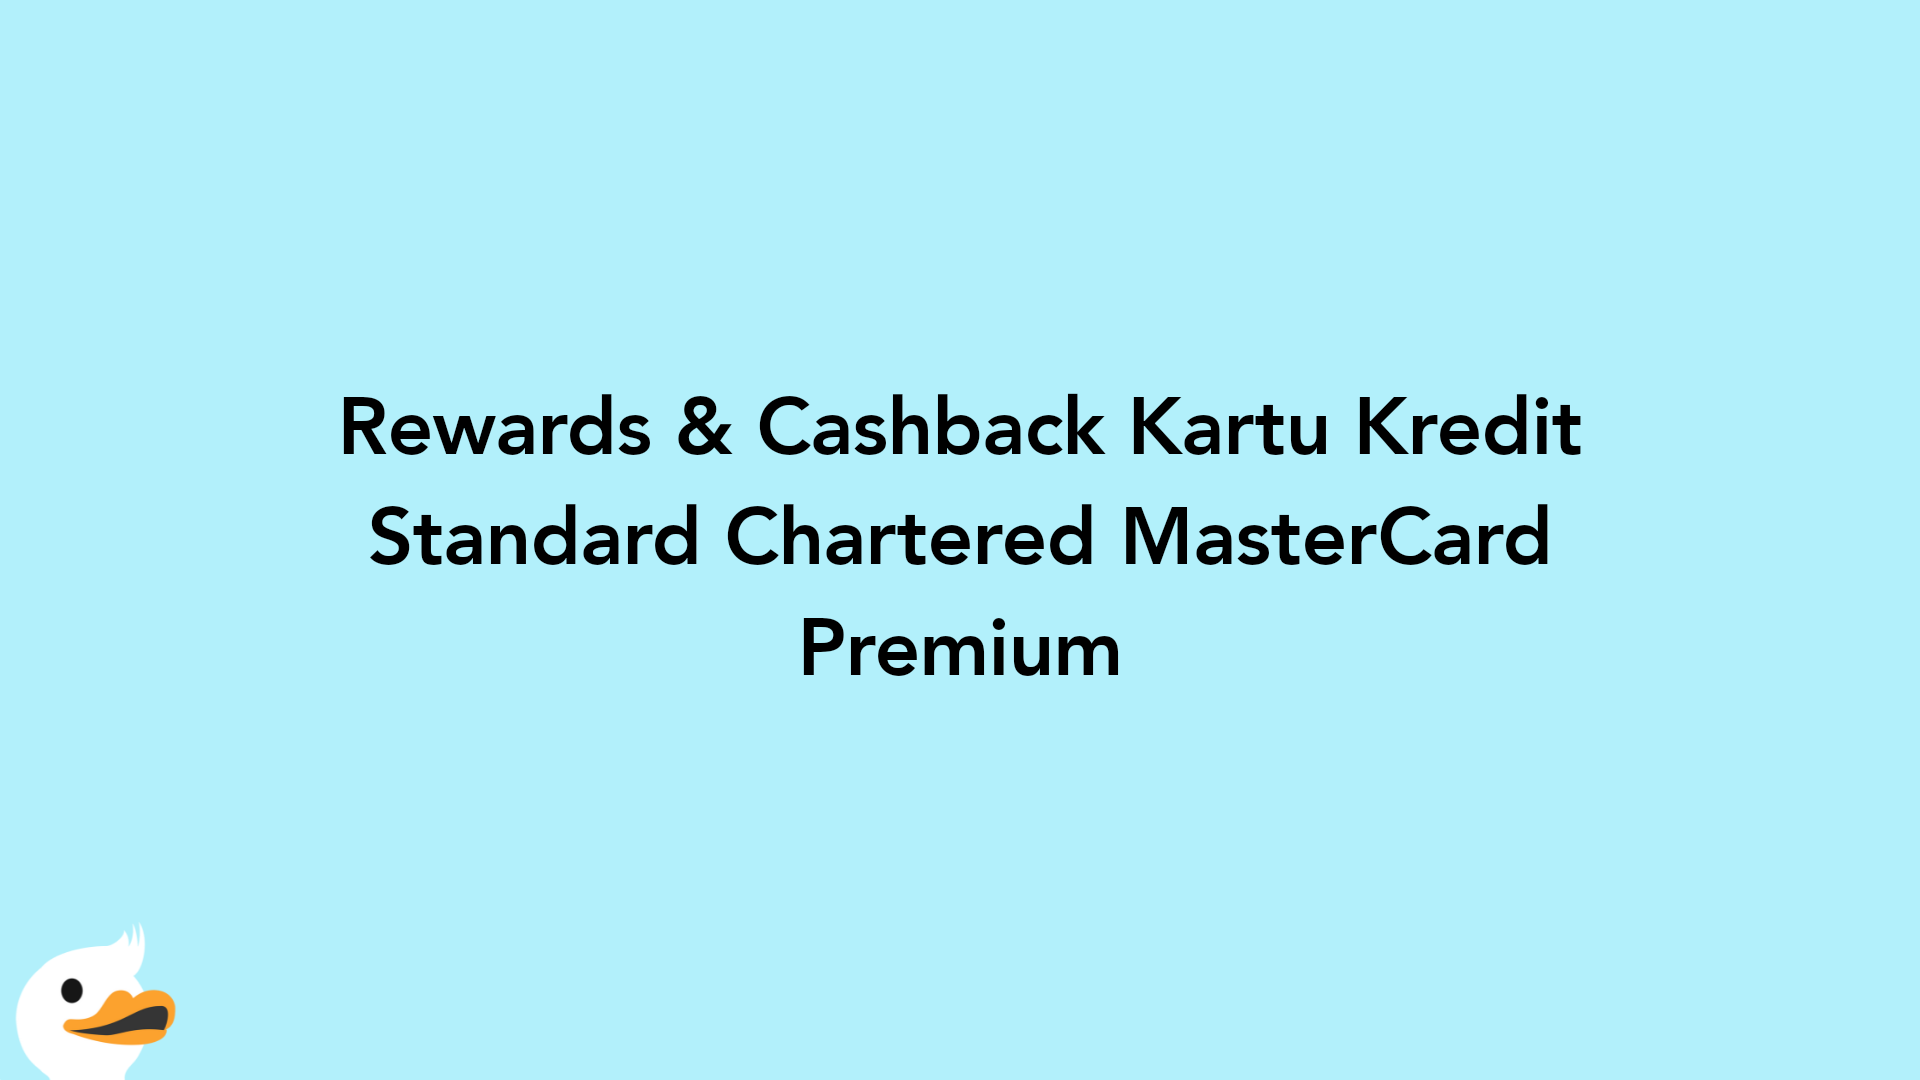 Rewards & Cashback Kartu Kredit Standard Chartered MasterCard Premium